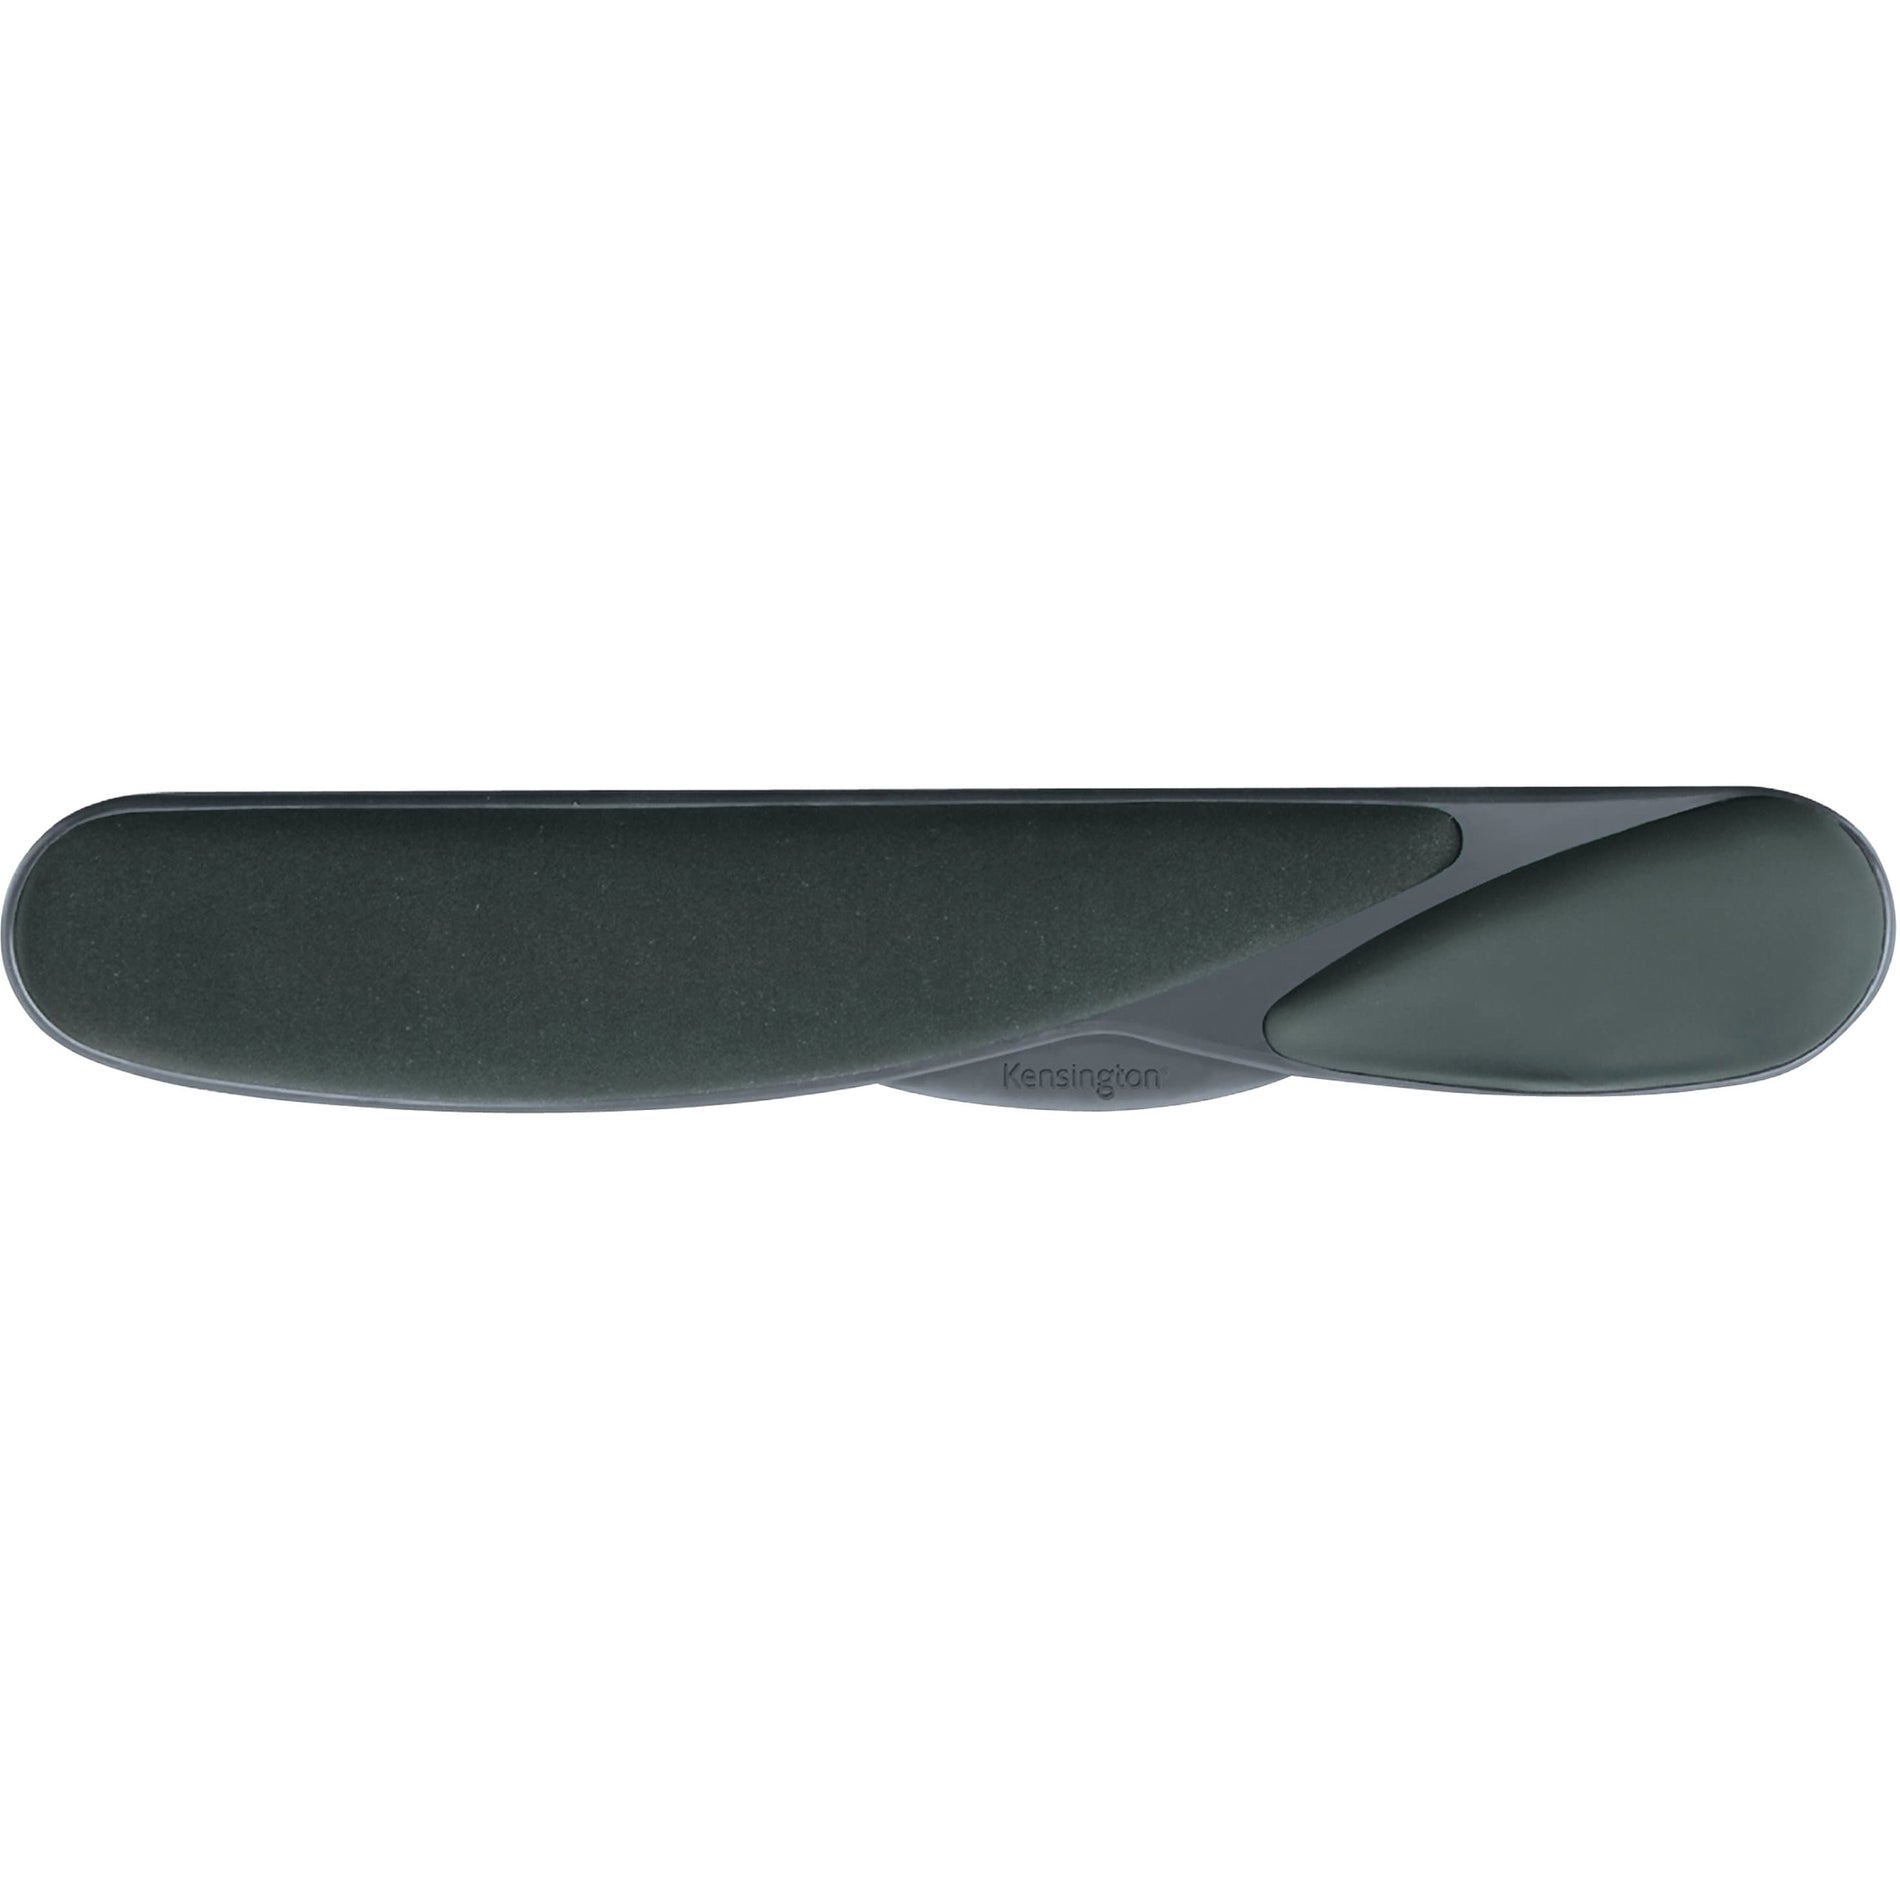 Kensington K62813USF Memory Foam Keyboard Wrist Pillow - Black, Sweat and Dirt Resistant Wrist Rest